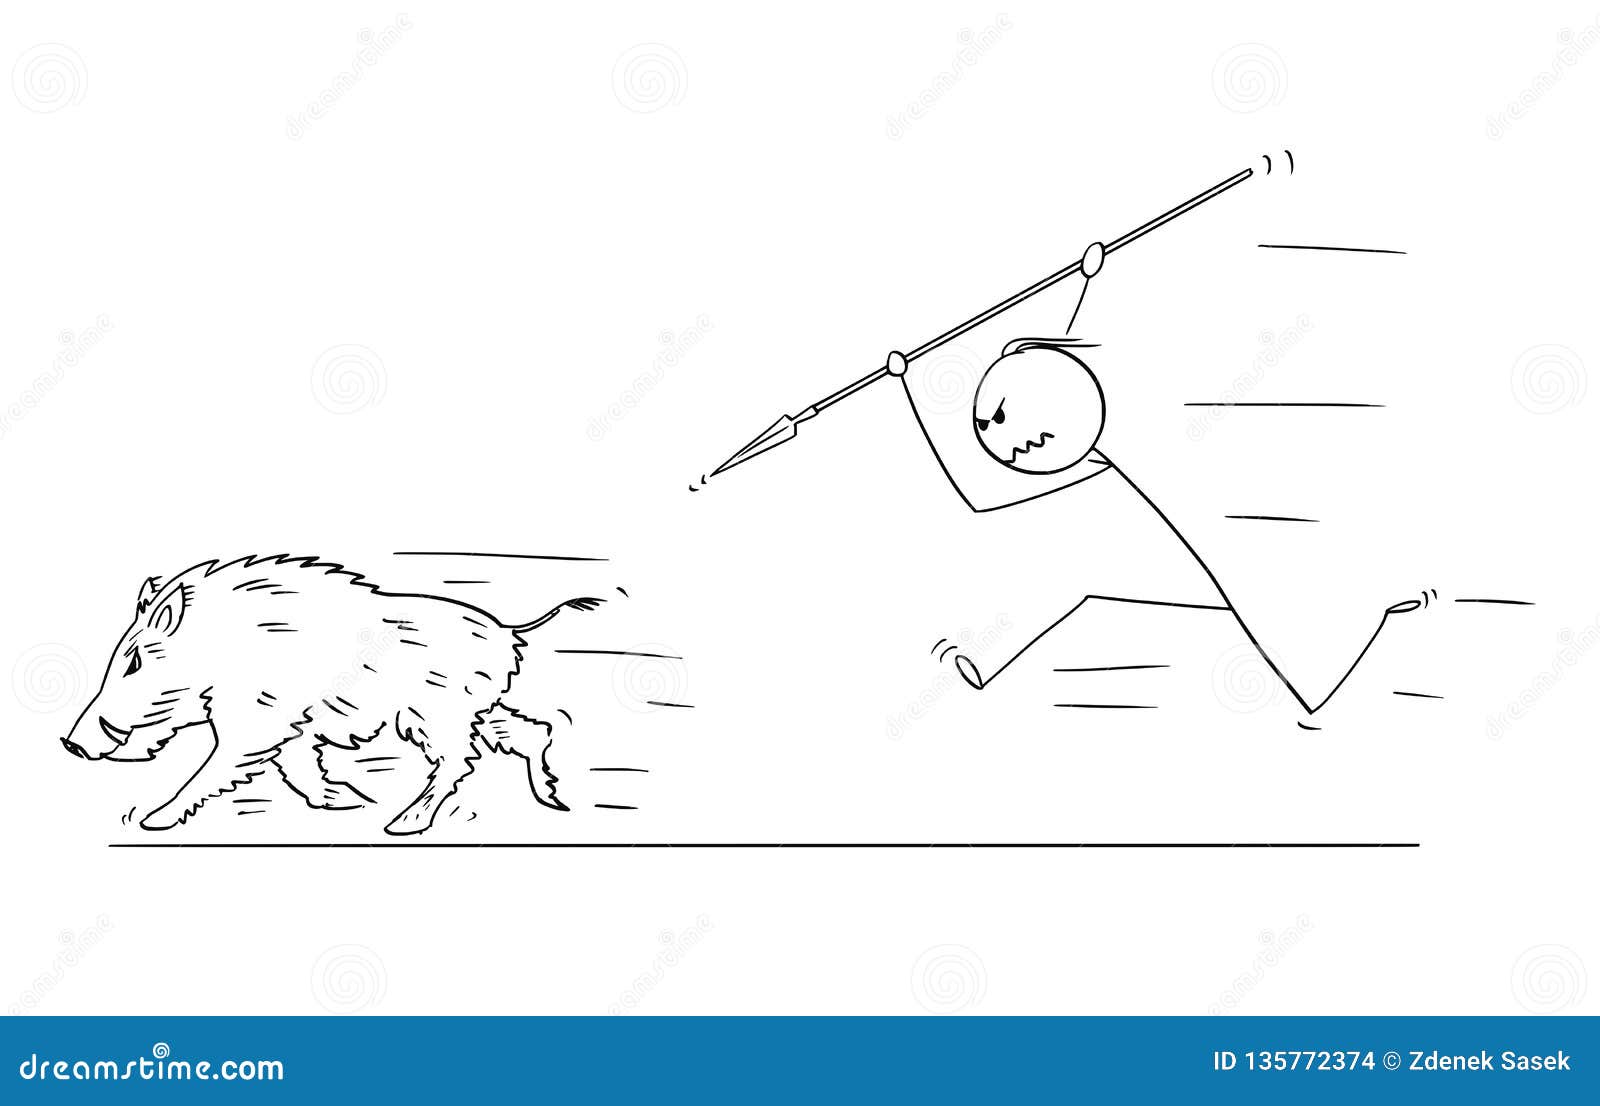 Cartoon of Man Hunting Wild Boar with Spear Stock Vector - Illustration of  kill, killing: 135772374